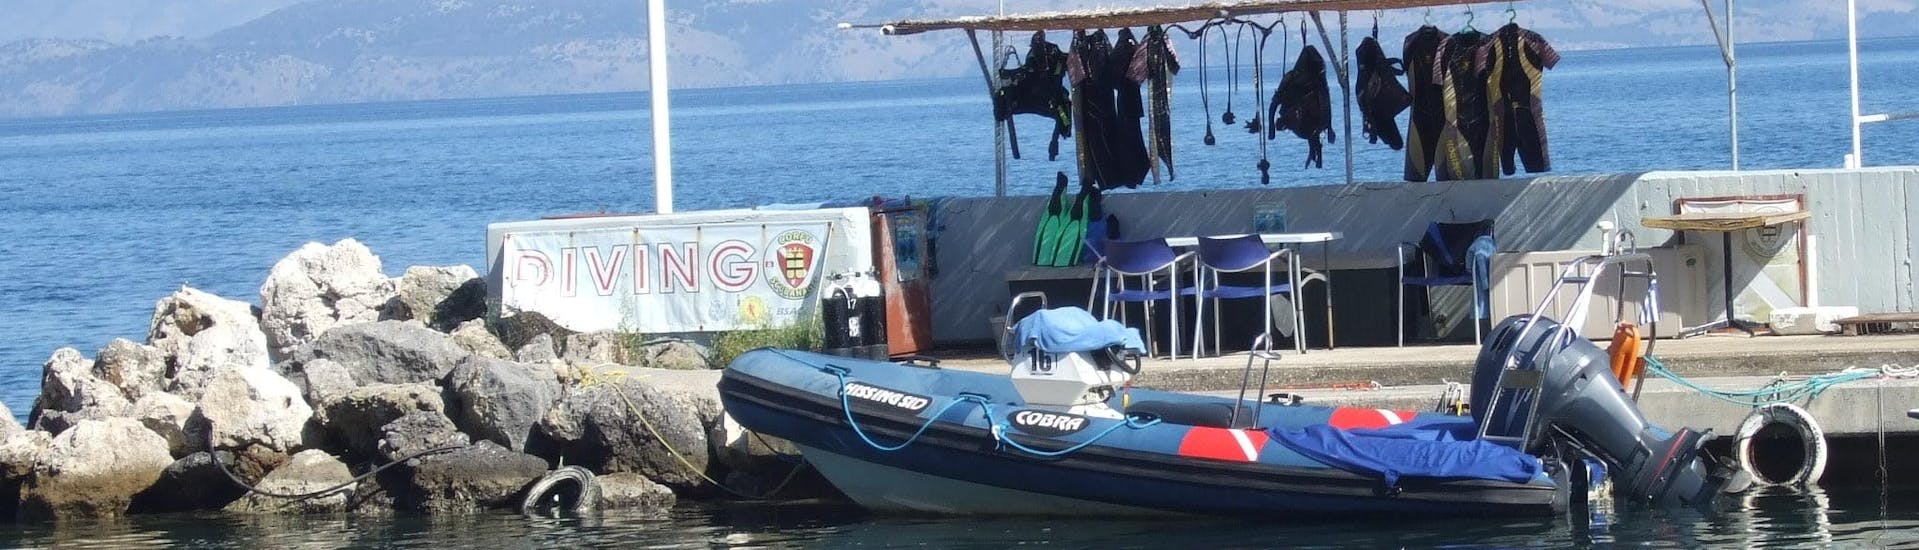 Blick auf das Scubanauts Diving Center in Korfu.